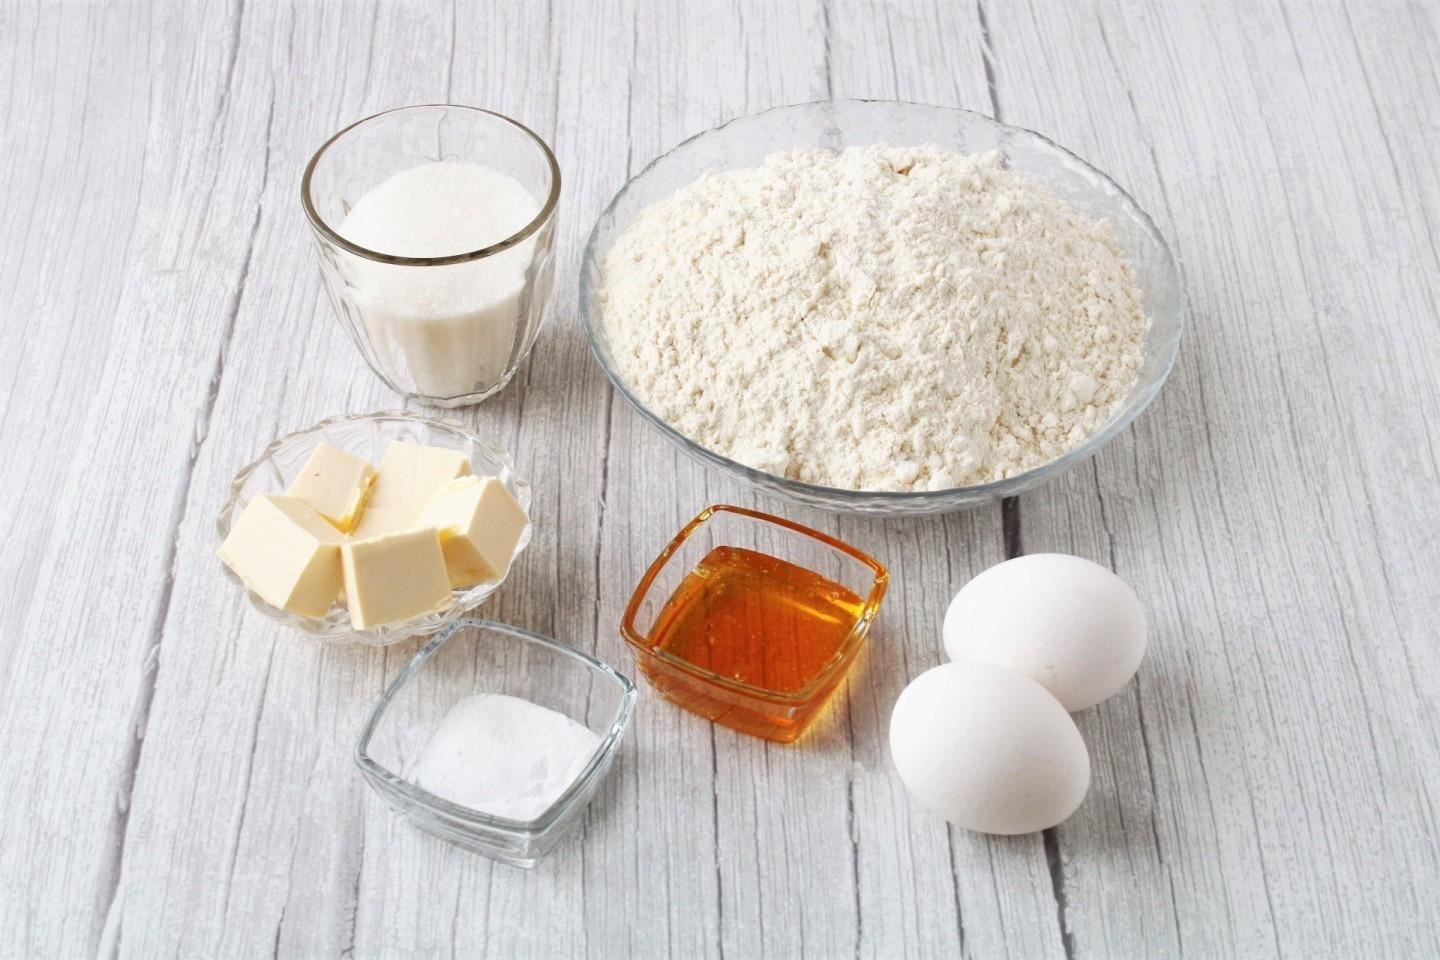 Пирог масло мука яйца сахар. Ингредиенты для медовика. Ингредиенты для медовика классического. Мука сода яйца и сахар. Фото ингредиентов для медовика.